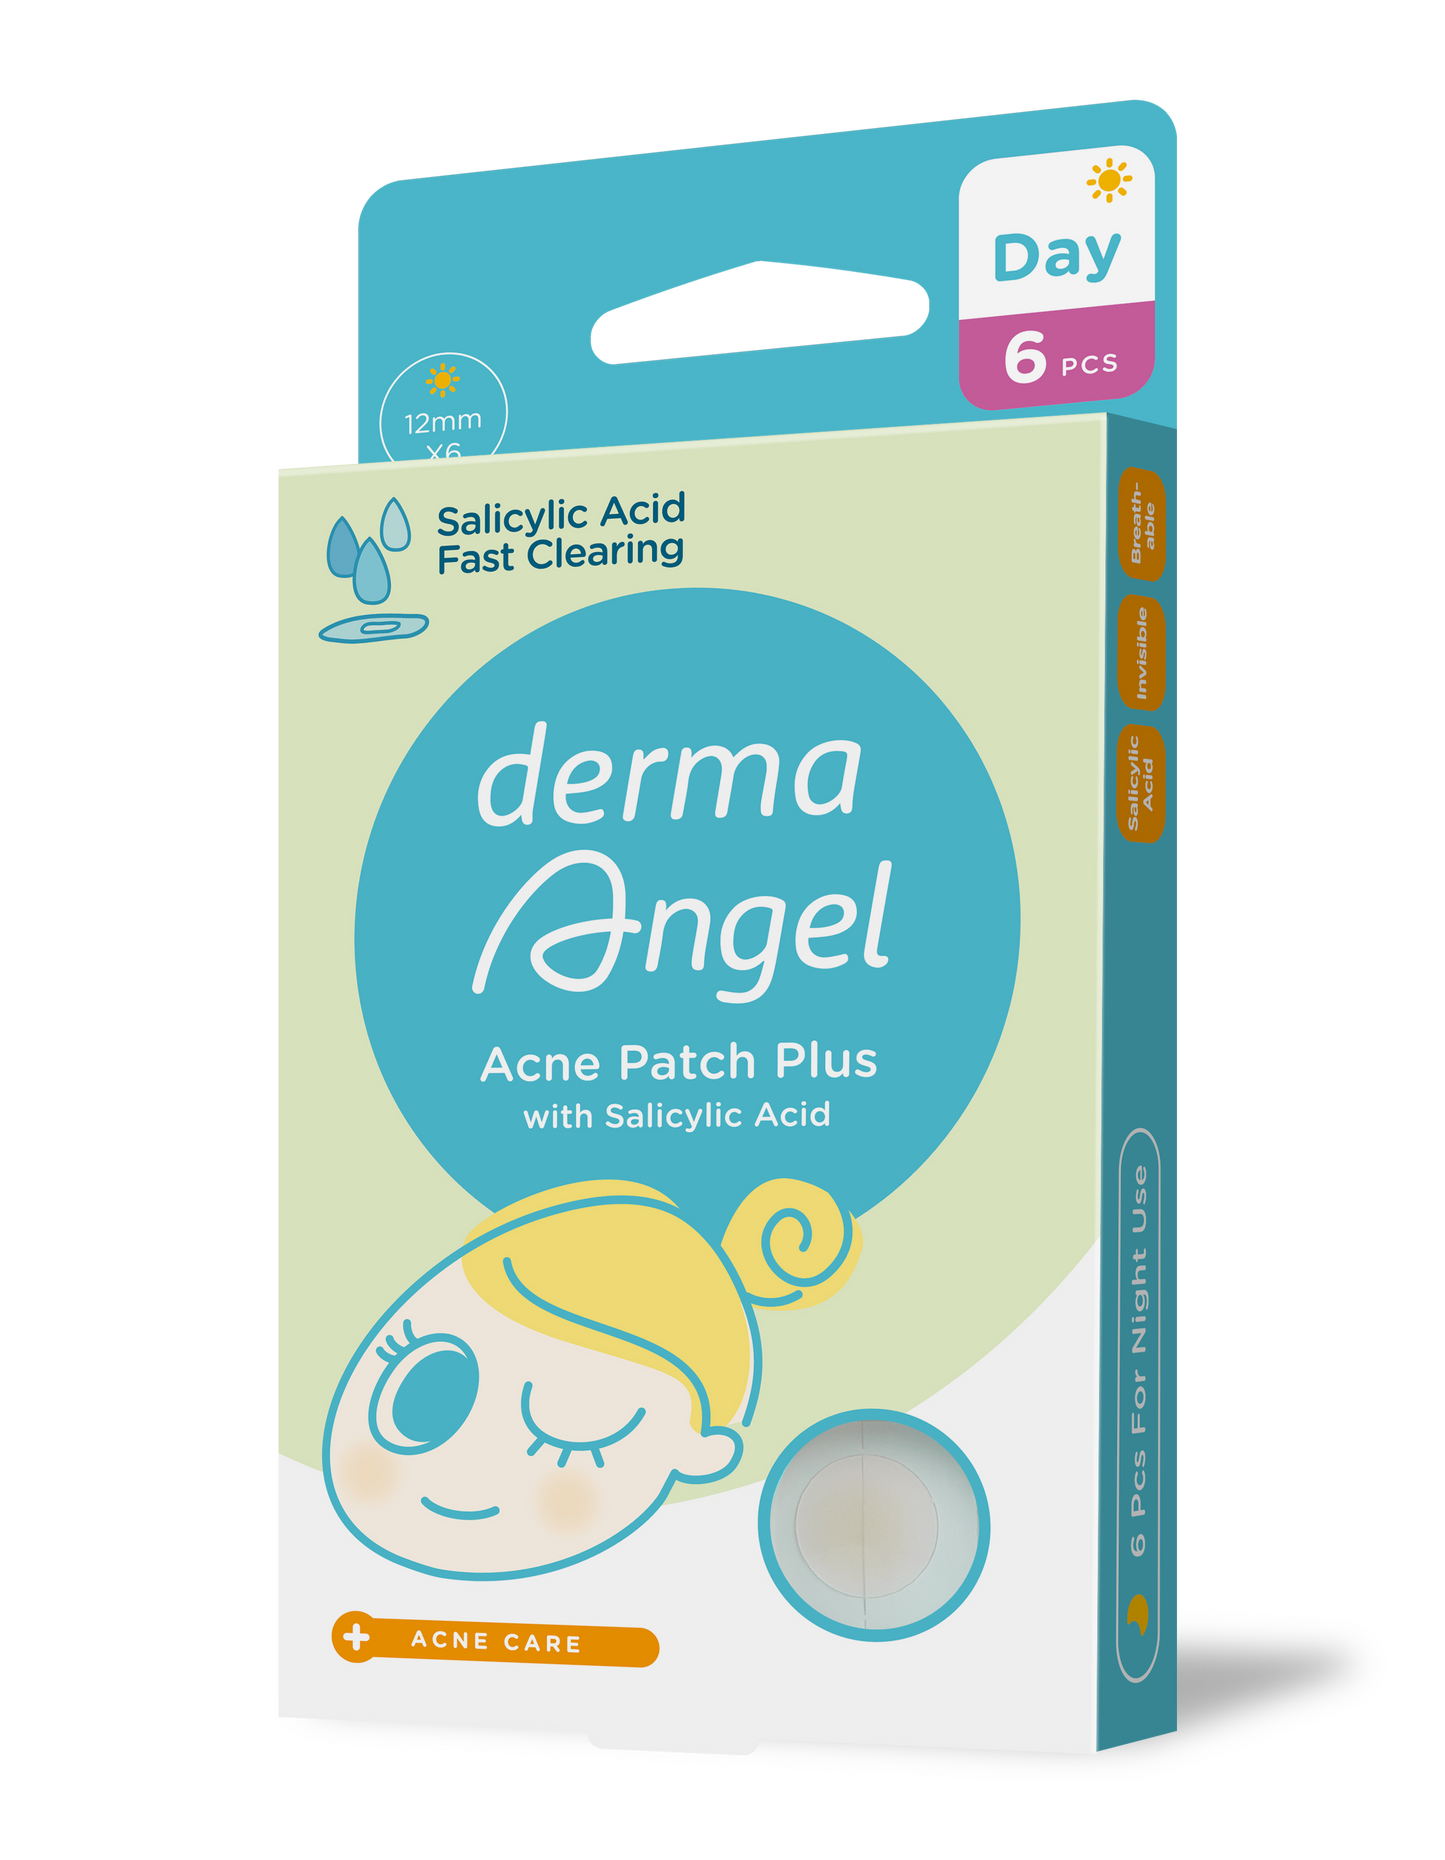 DermaAngel Acne Patch Plus Day 6 pcs - Kshipra Health Solutions